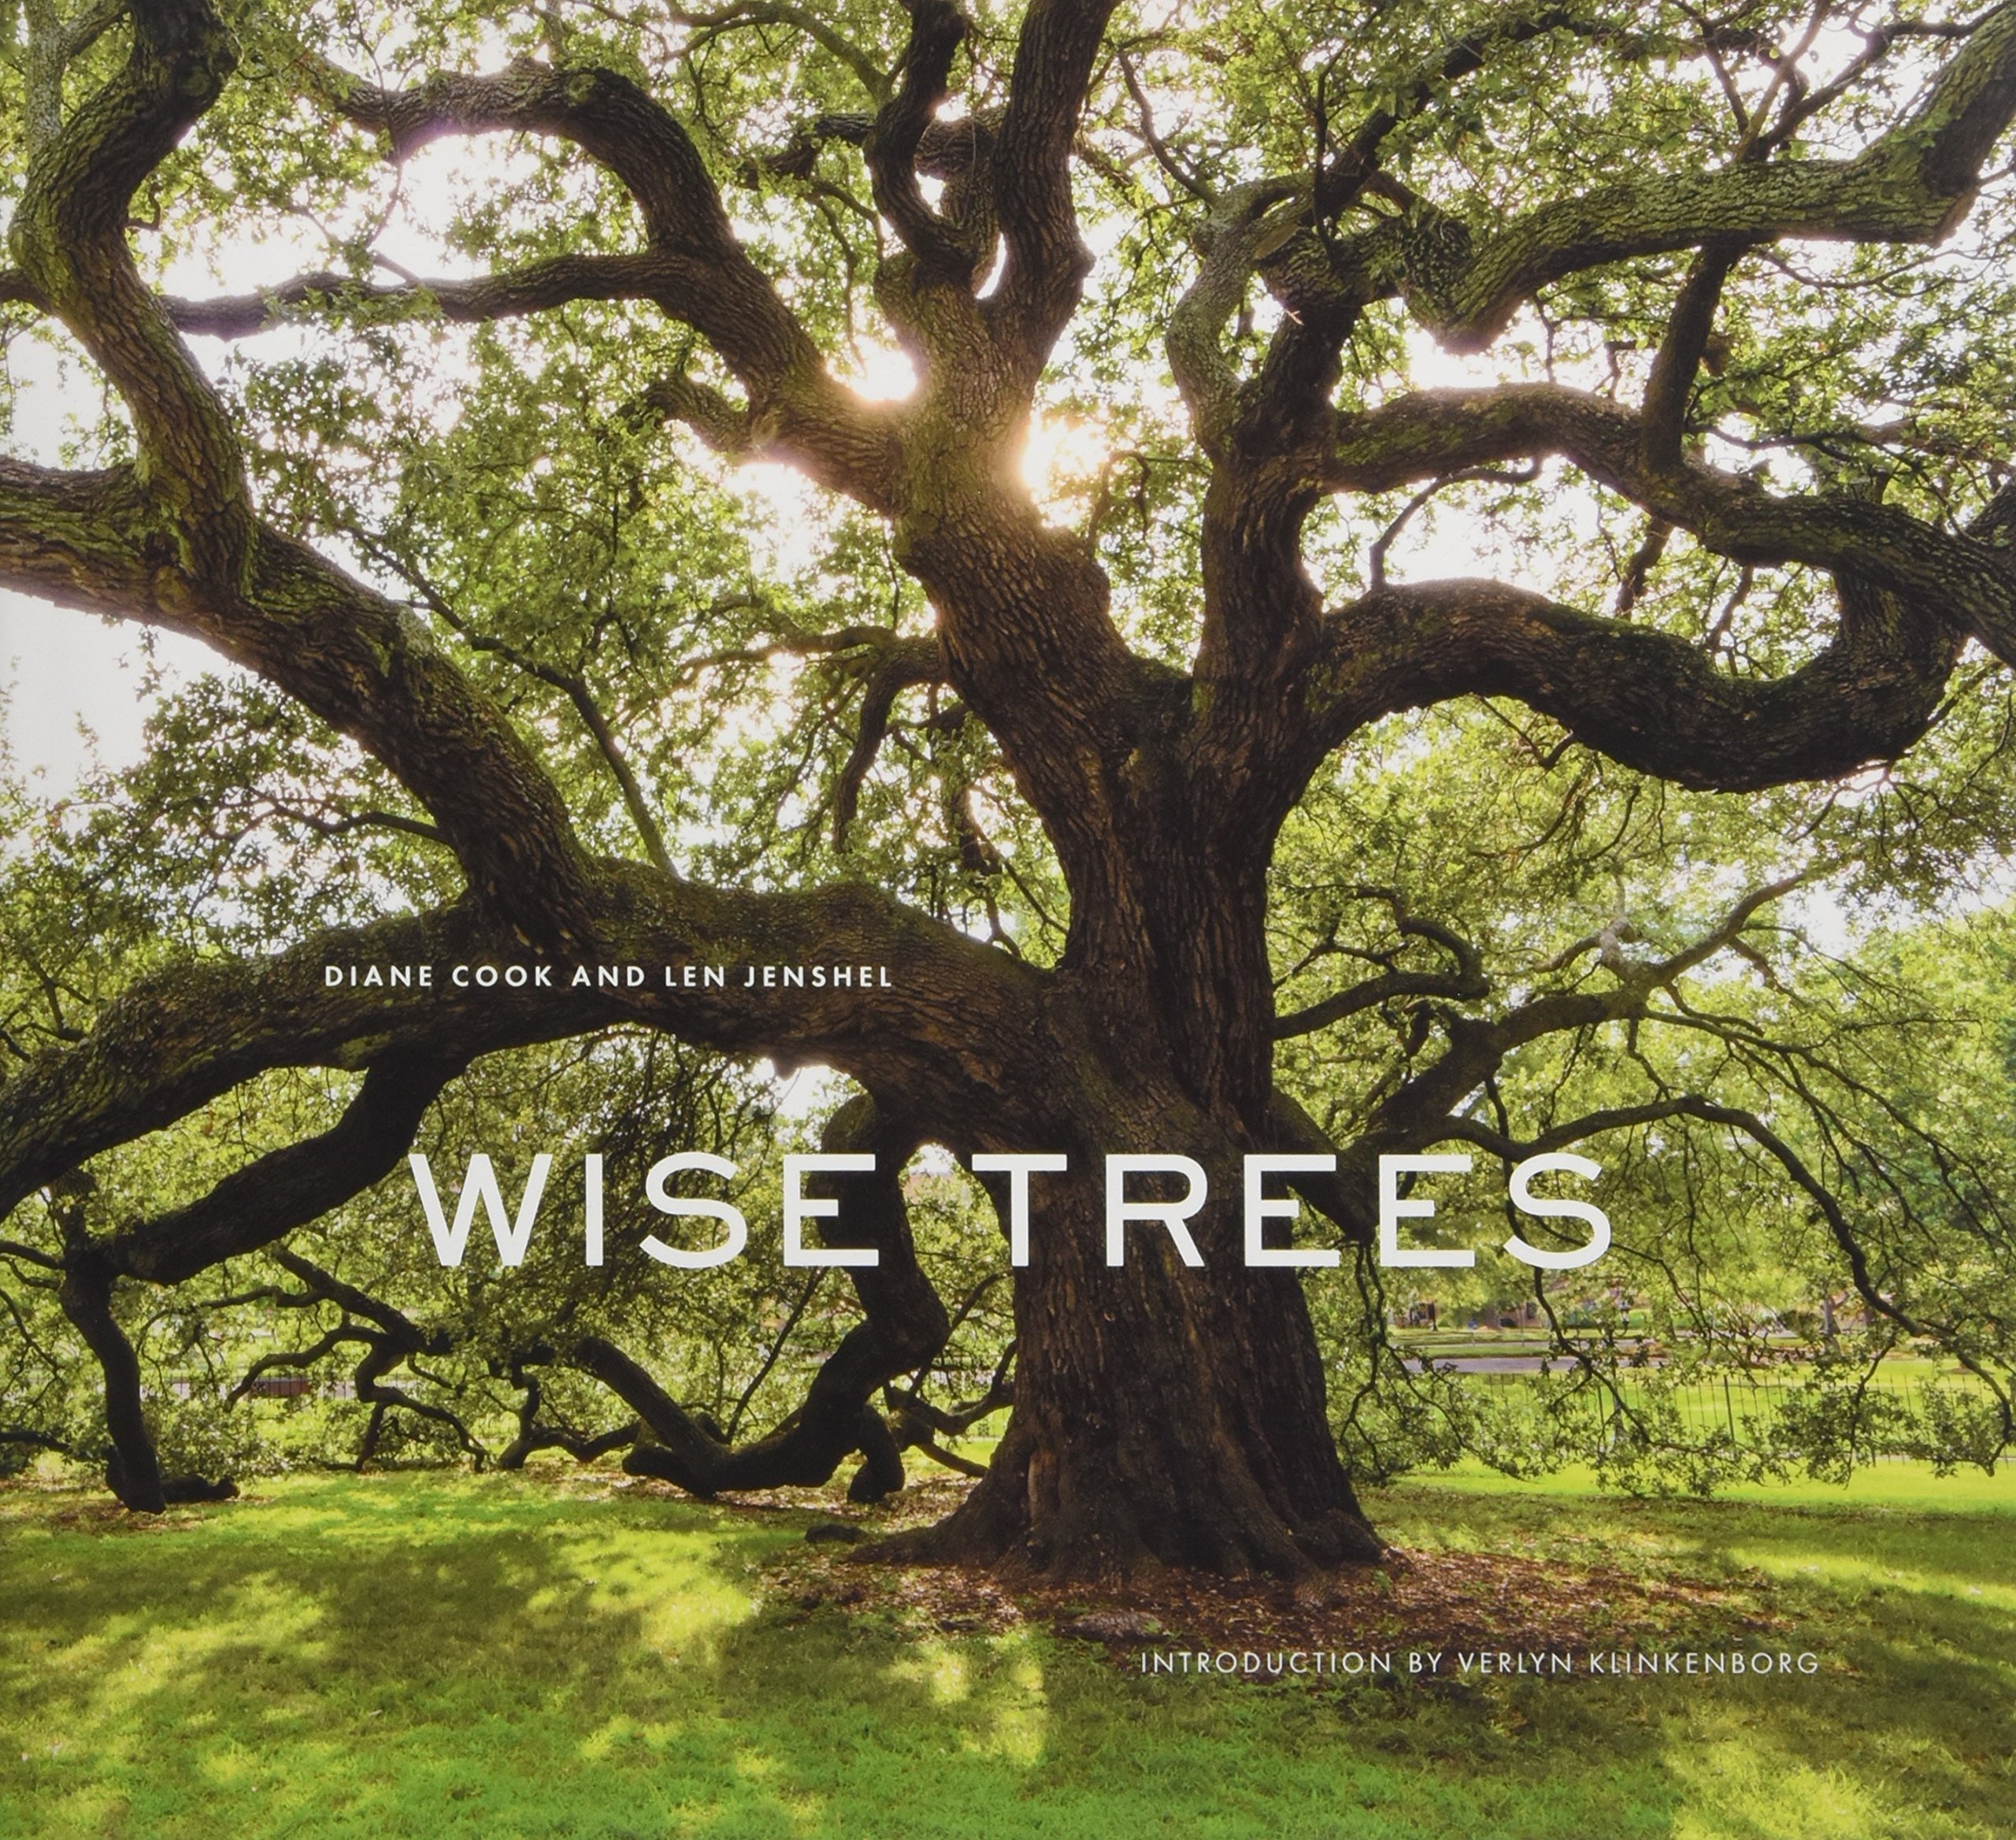 Amazon.com: Wise Trees (9781419727009): Diane Cook, Len Jenshel ...